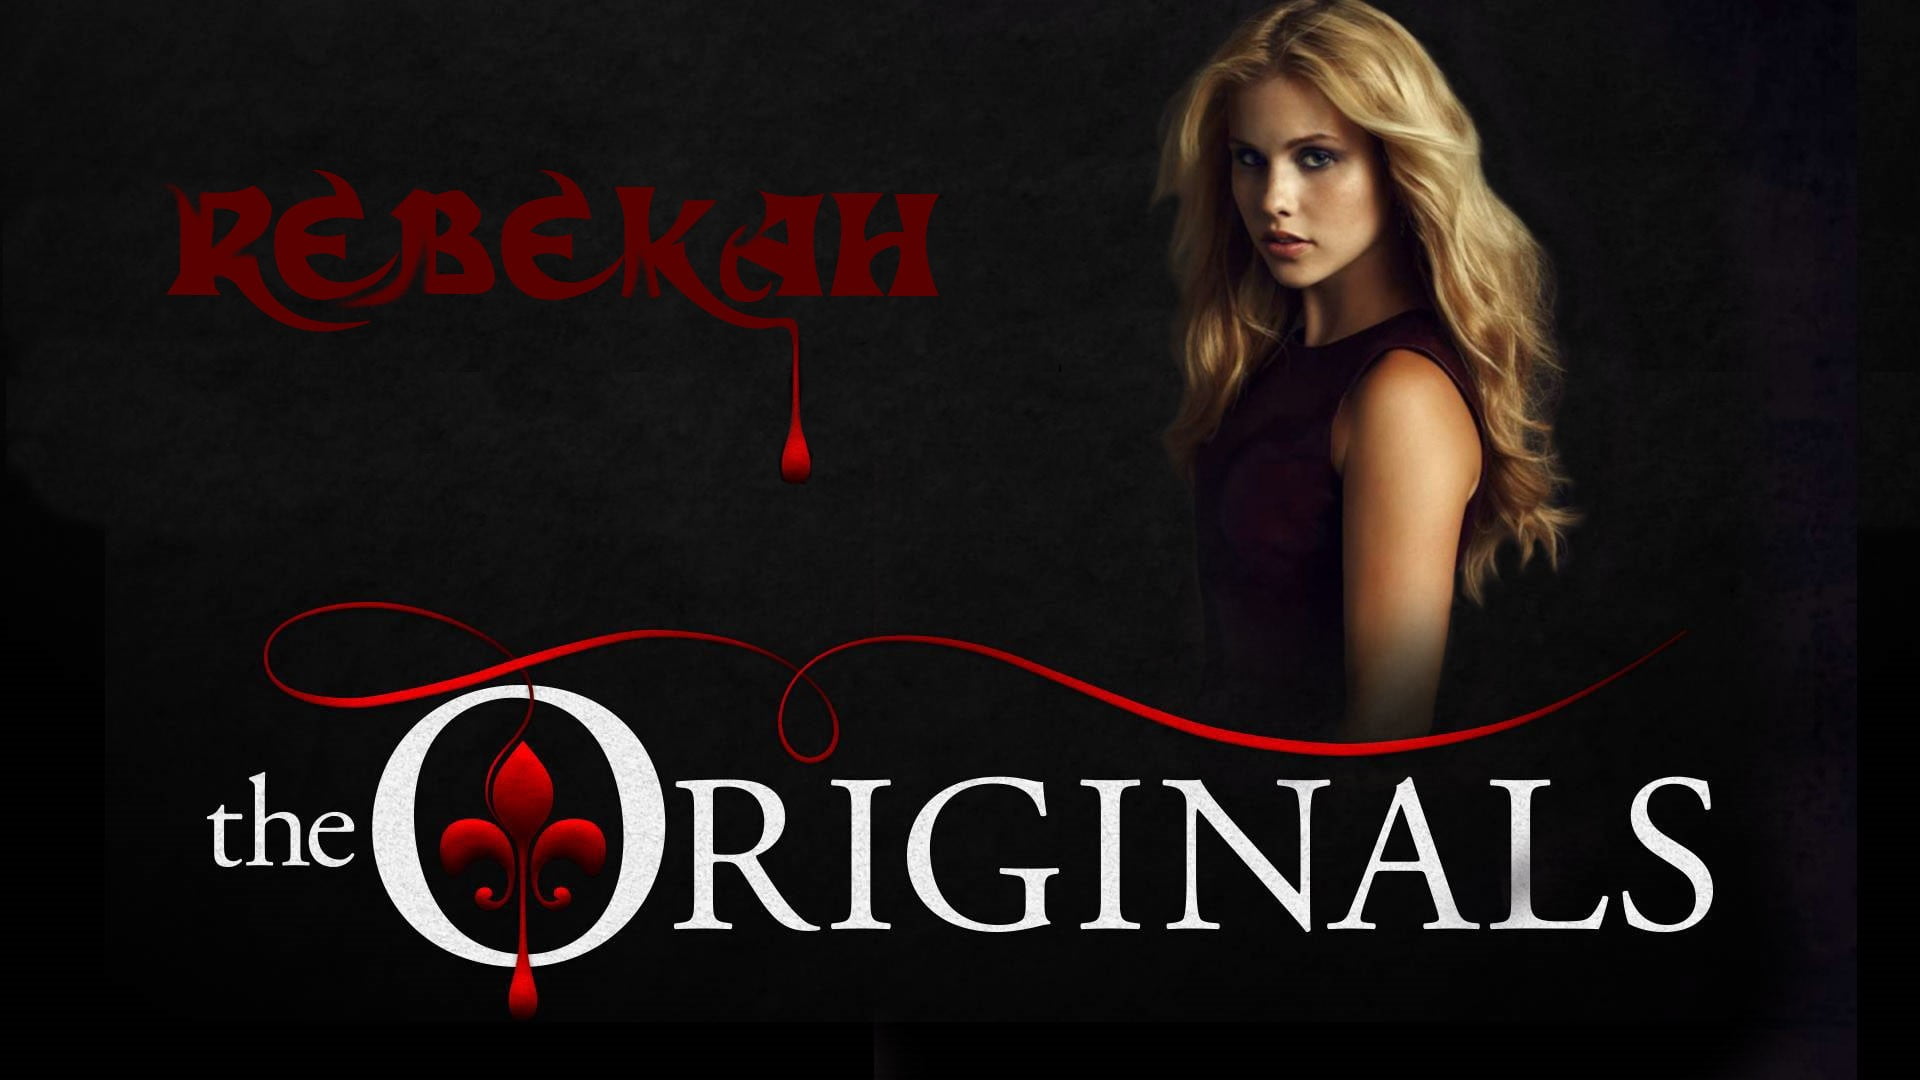 Rebekah The Originals wallpaper, Claire Holt, women, beauty, beautiful woman